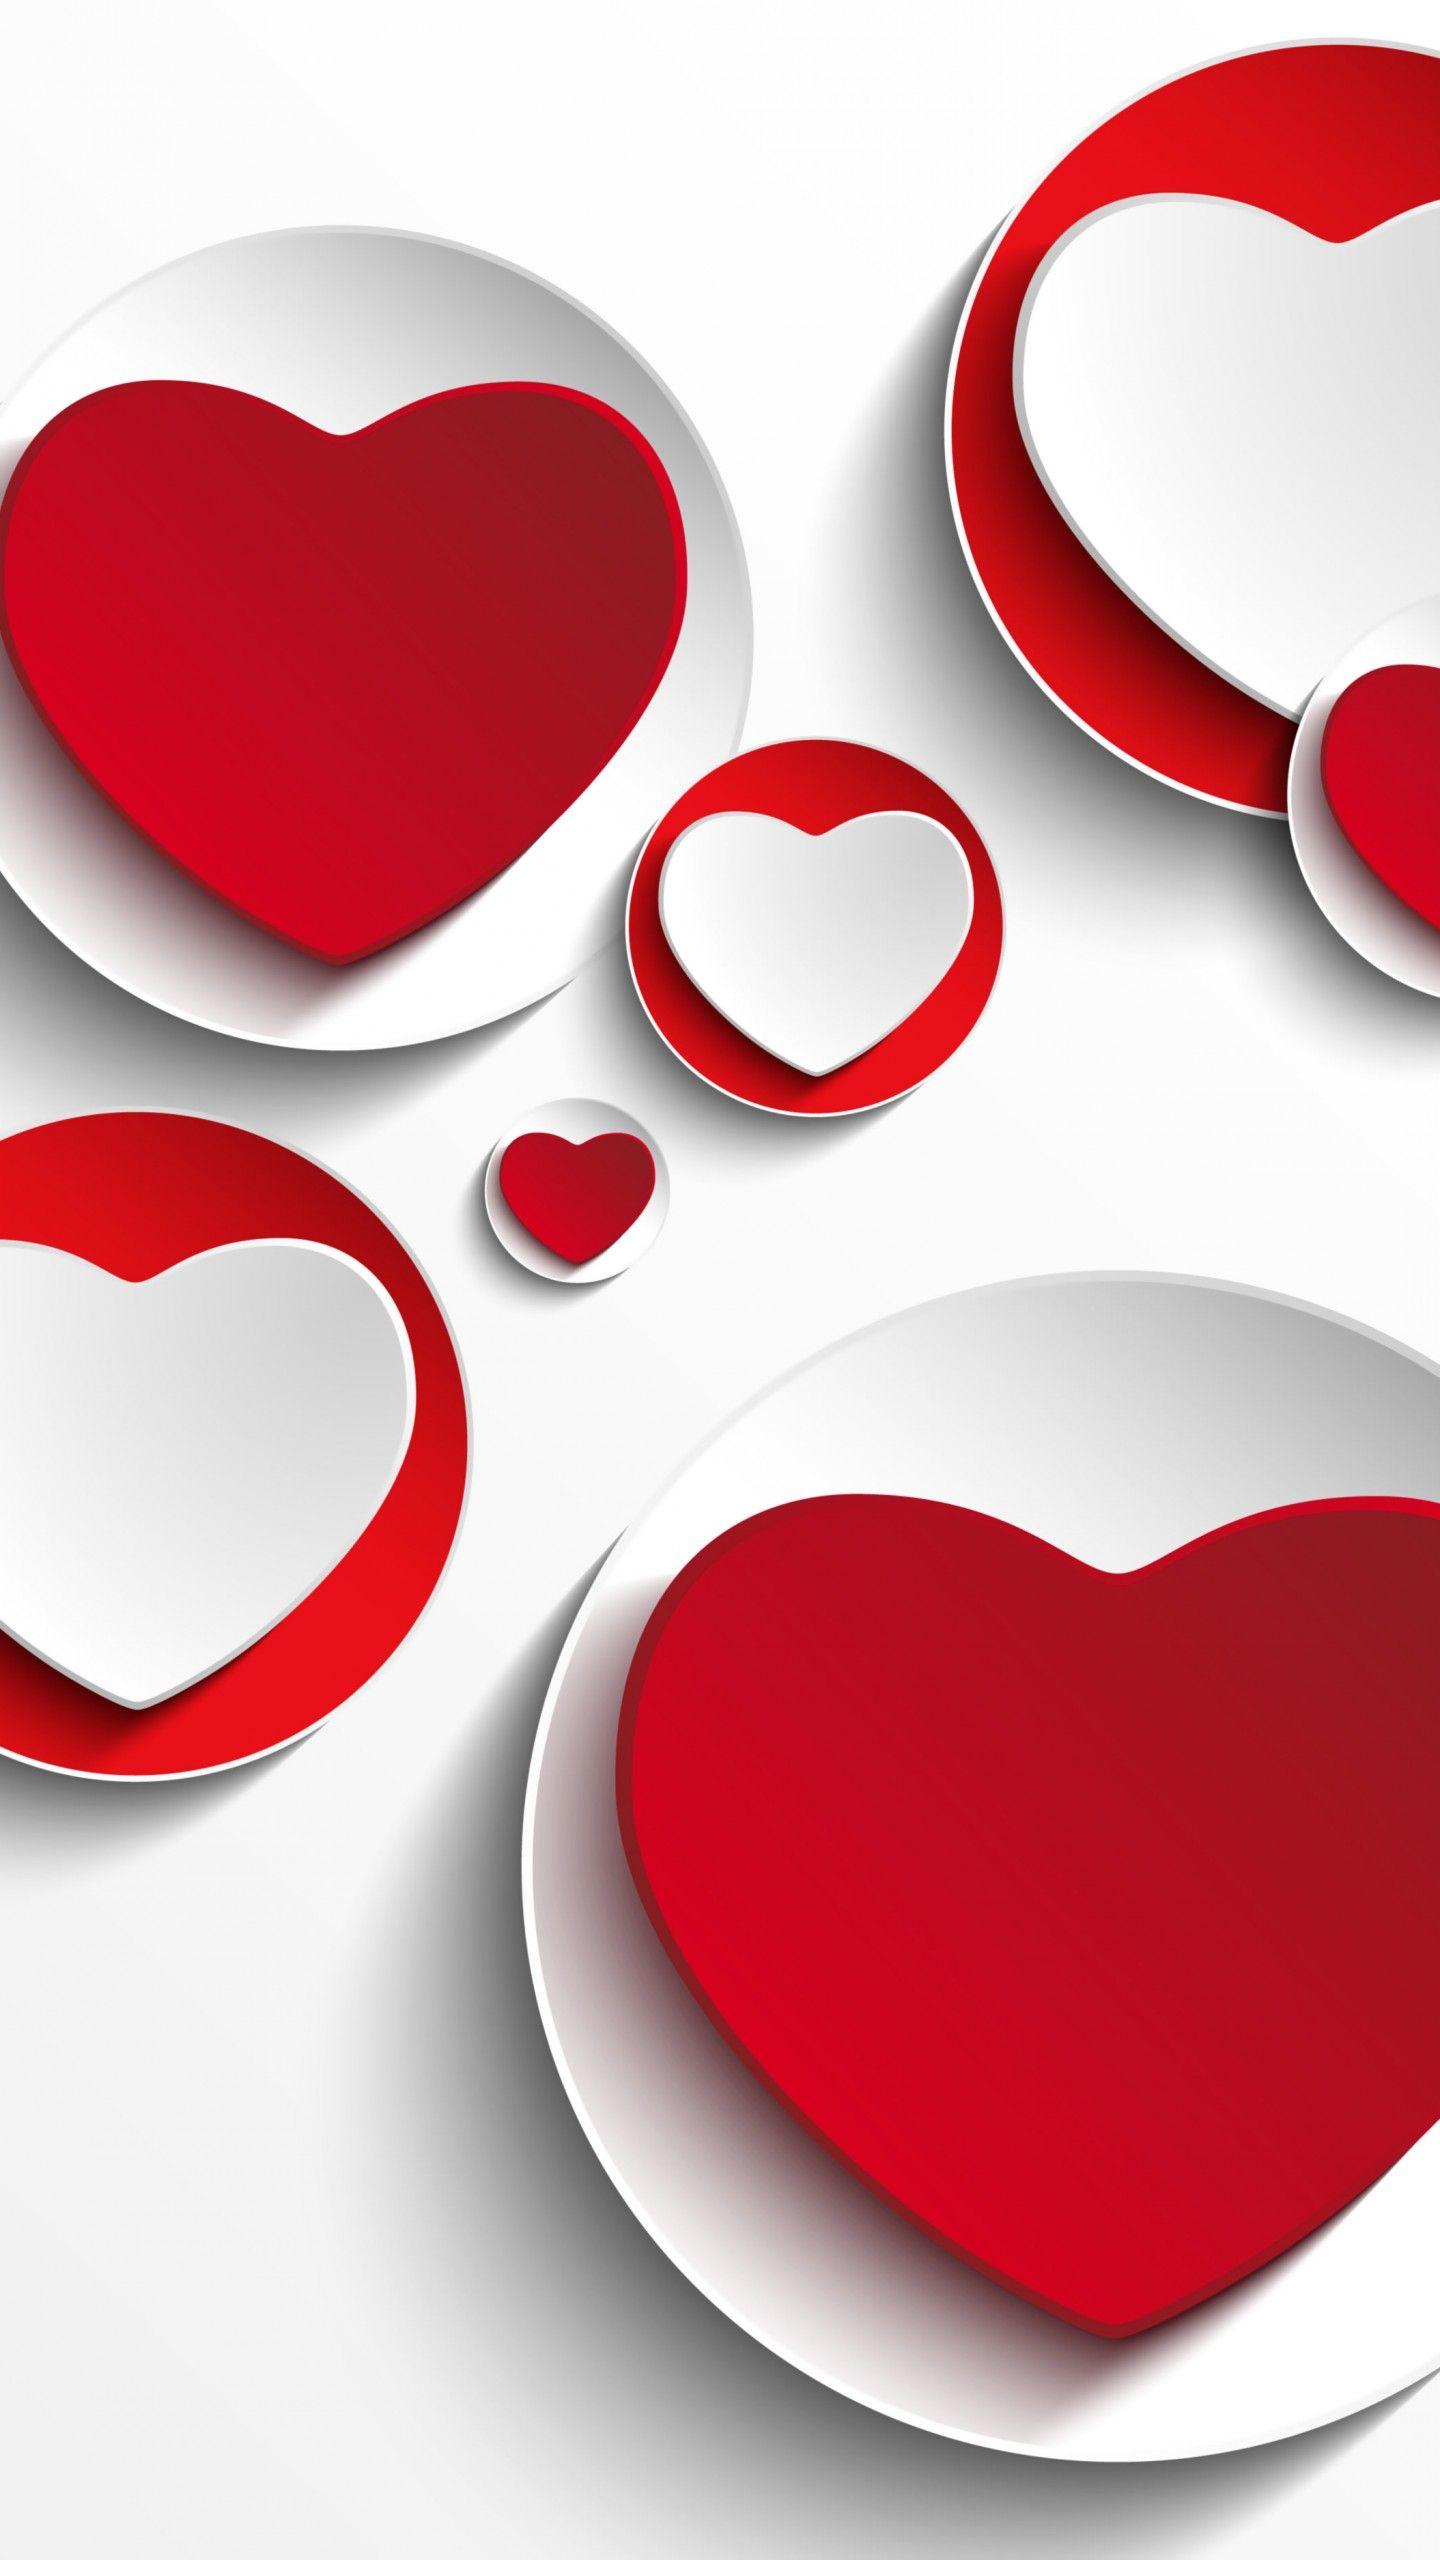 Red Love Hearts Wallpaper Mobile Quad HD 1440x2560